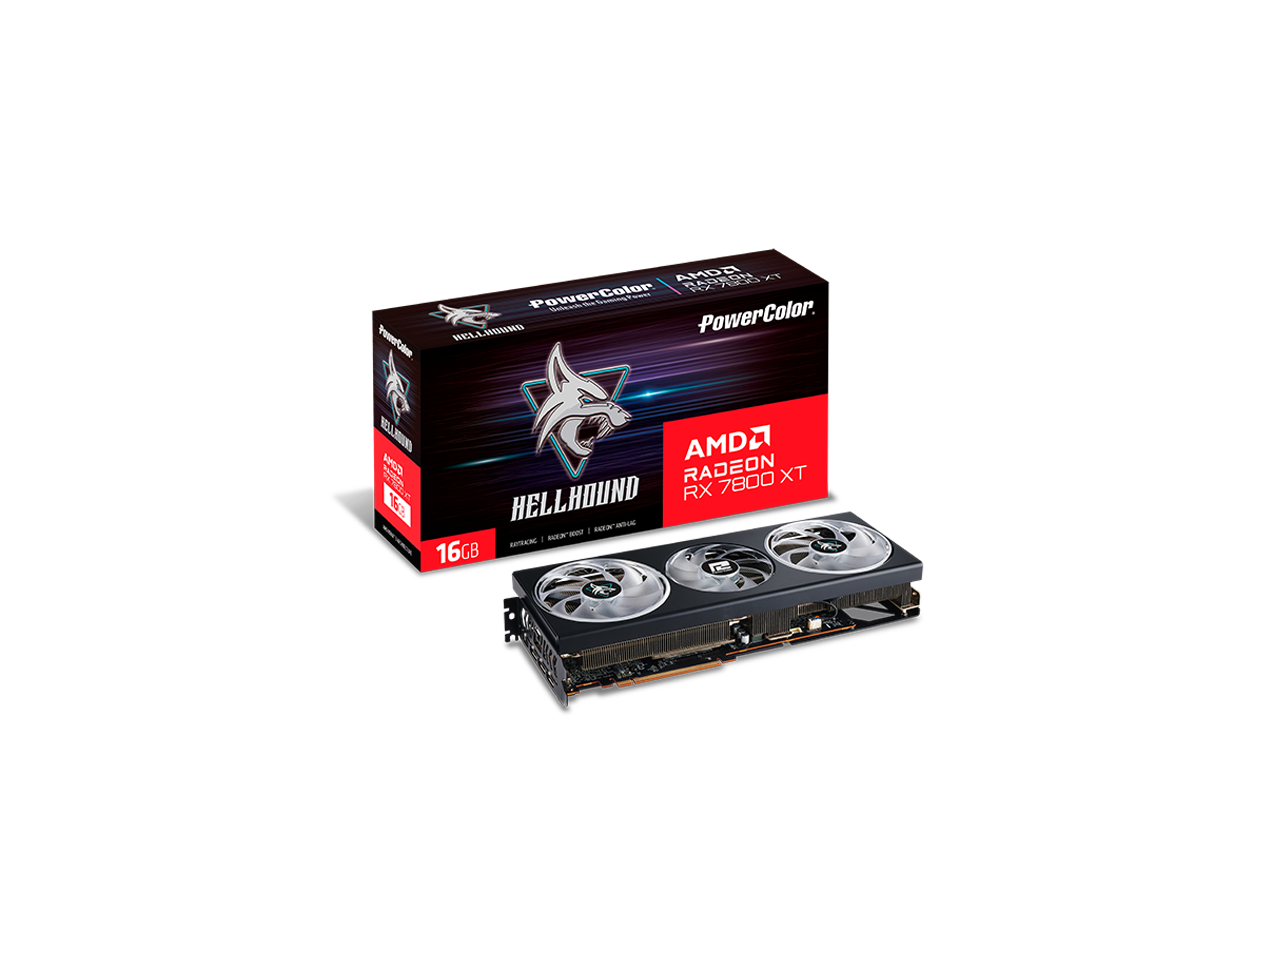 PowerColor Hellhound Radeon RX 7800 XT 16GB Graphics Card $490 + Free Shipping